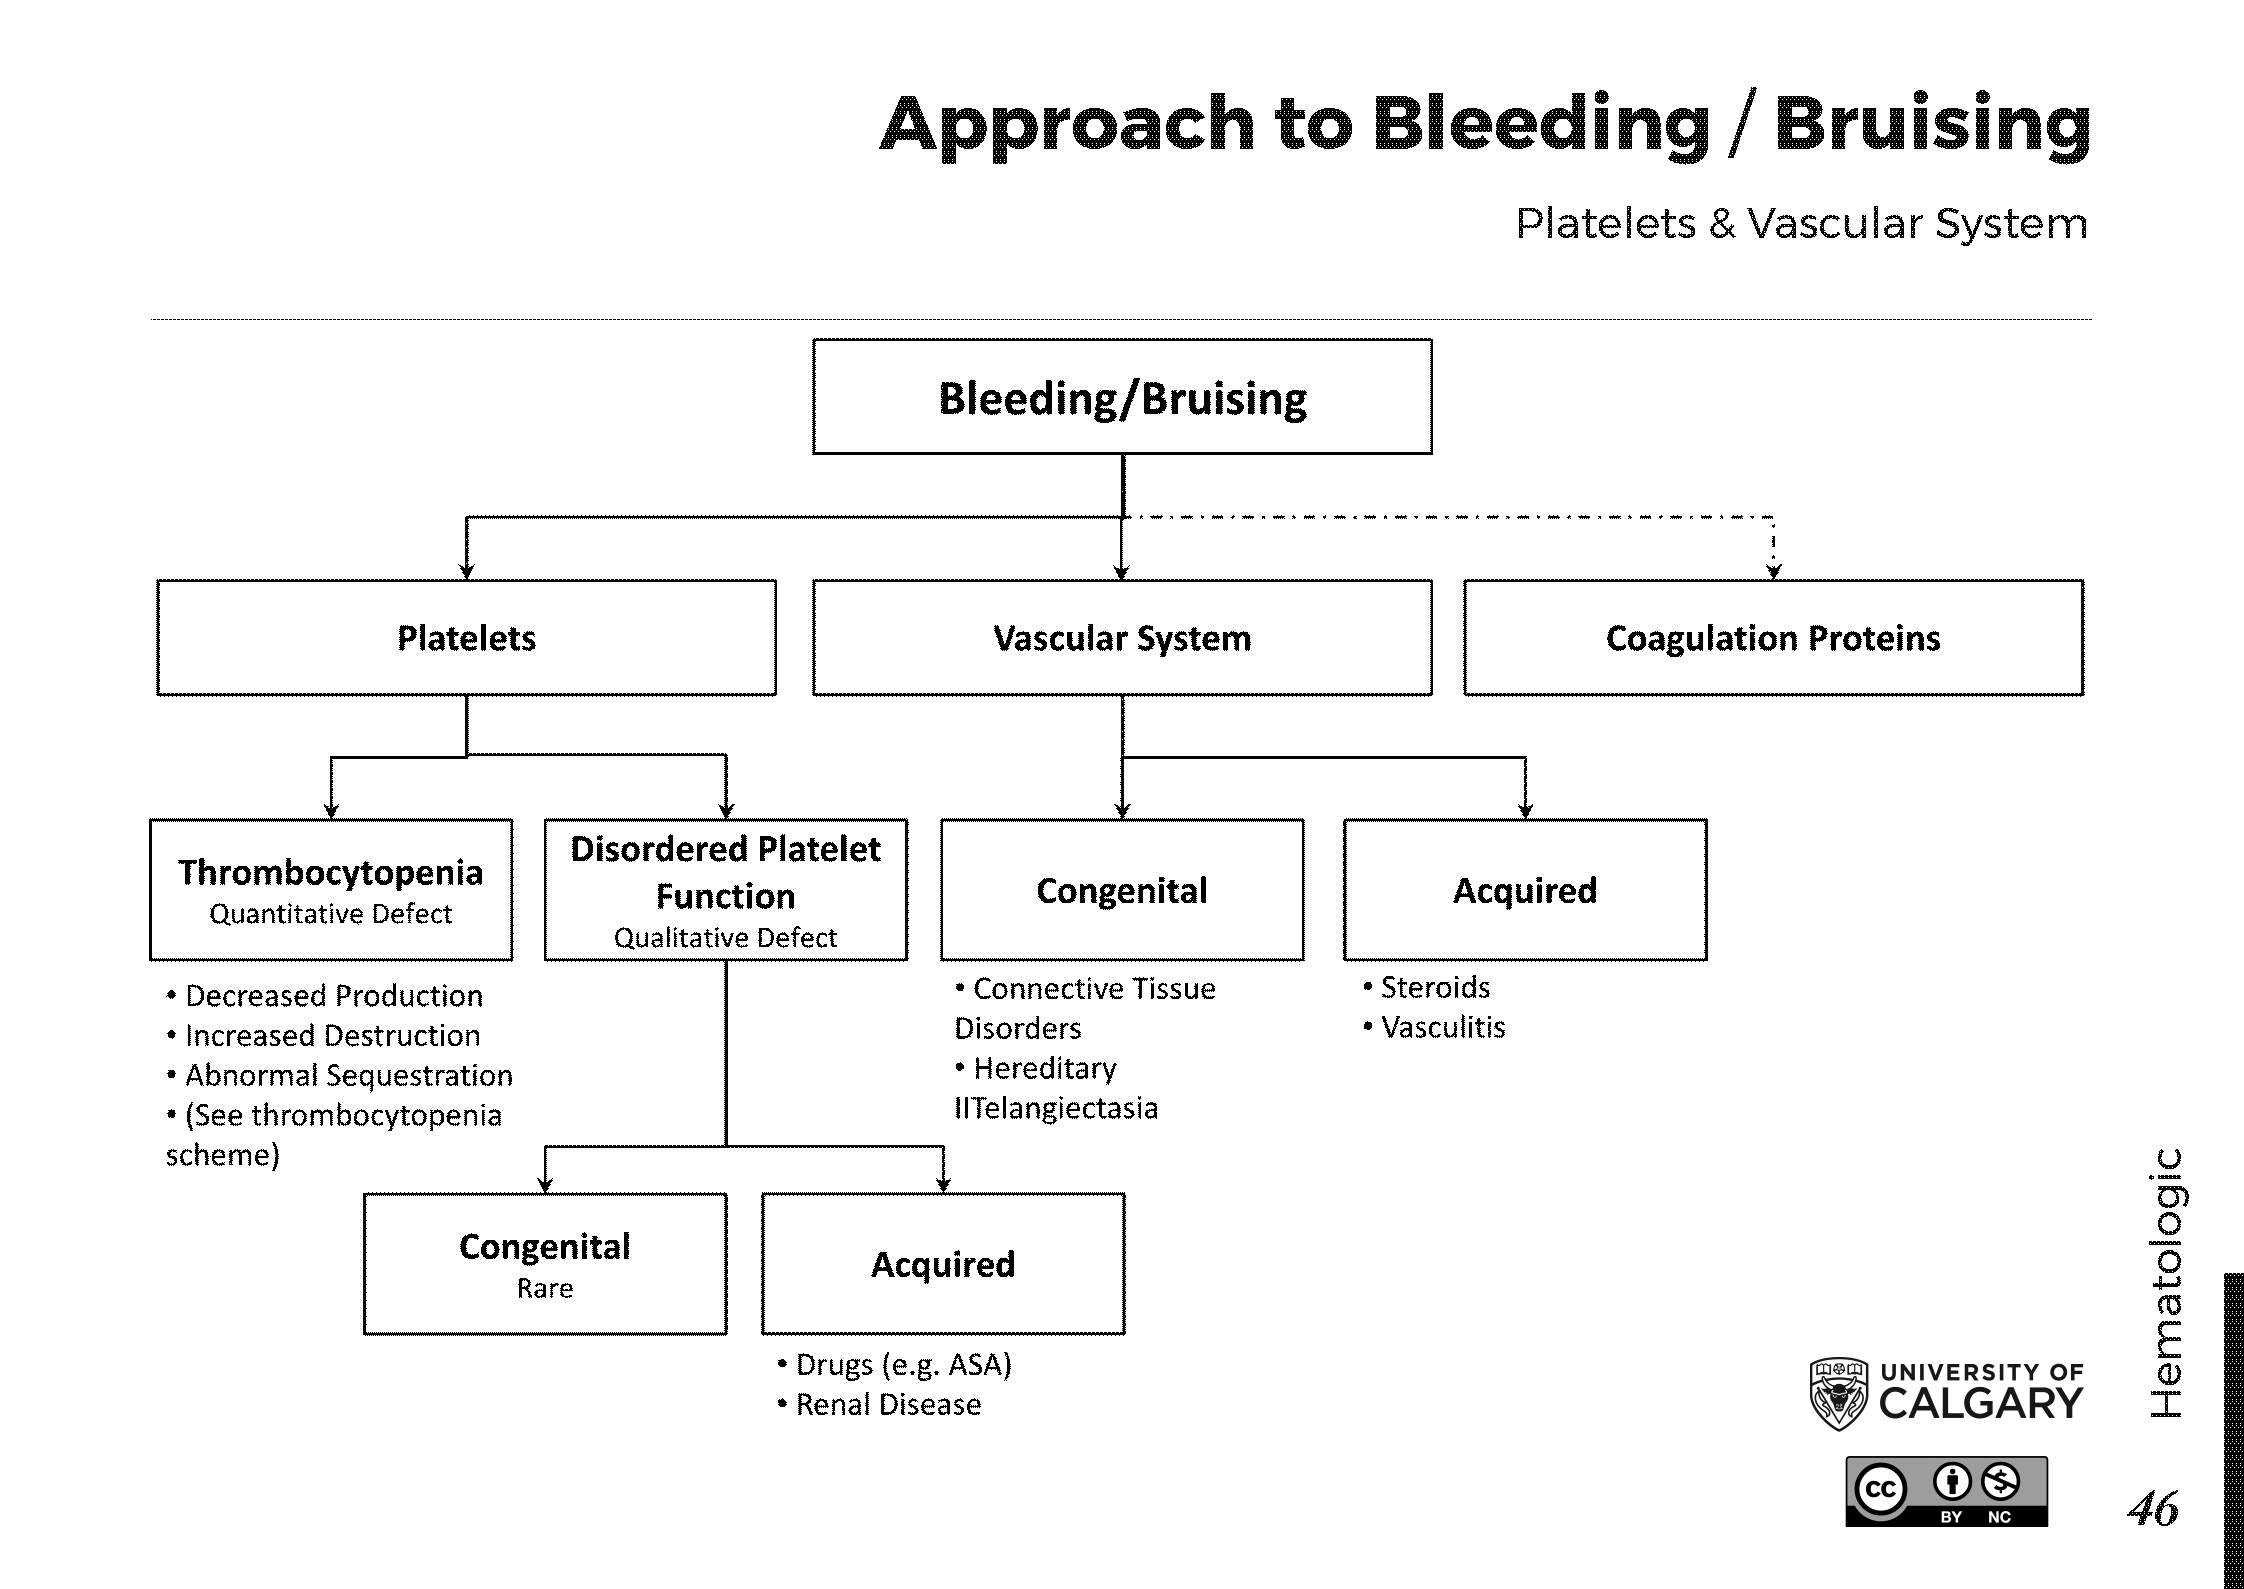 APPROACH TO BLEEDING/BRUISING: Platelets & Vascular System Scheme